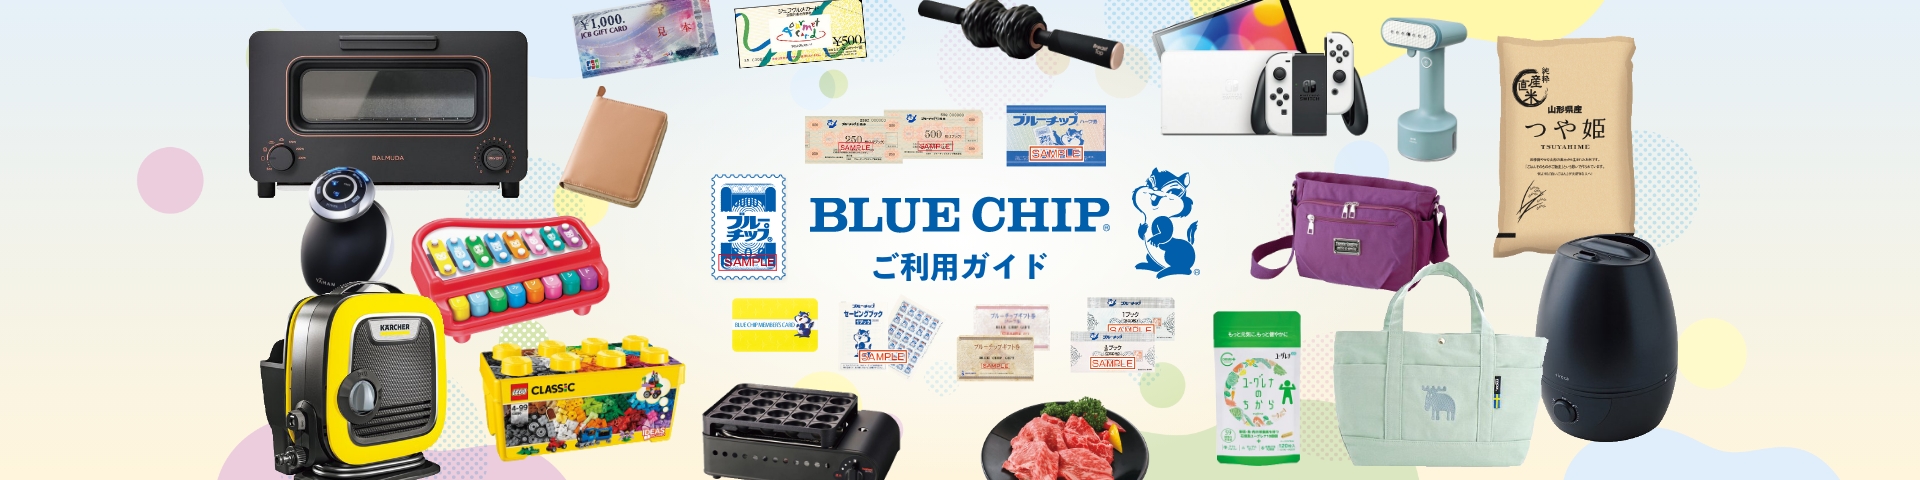 BLUE CHIP カタログサイト